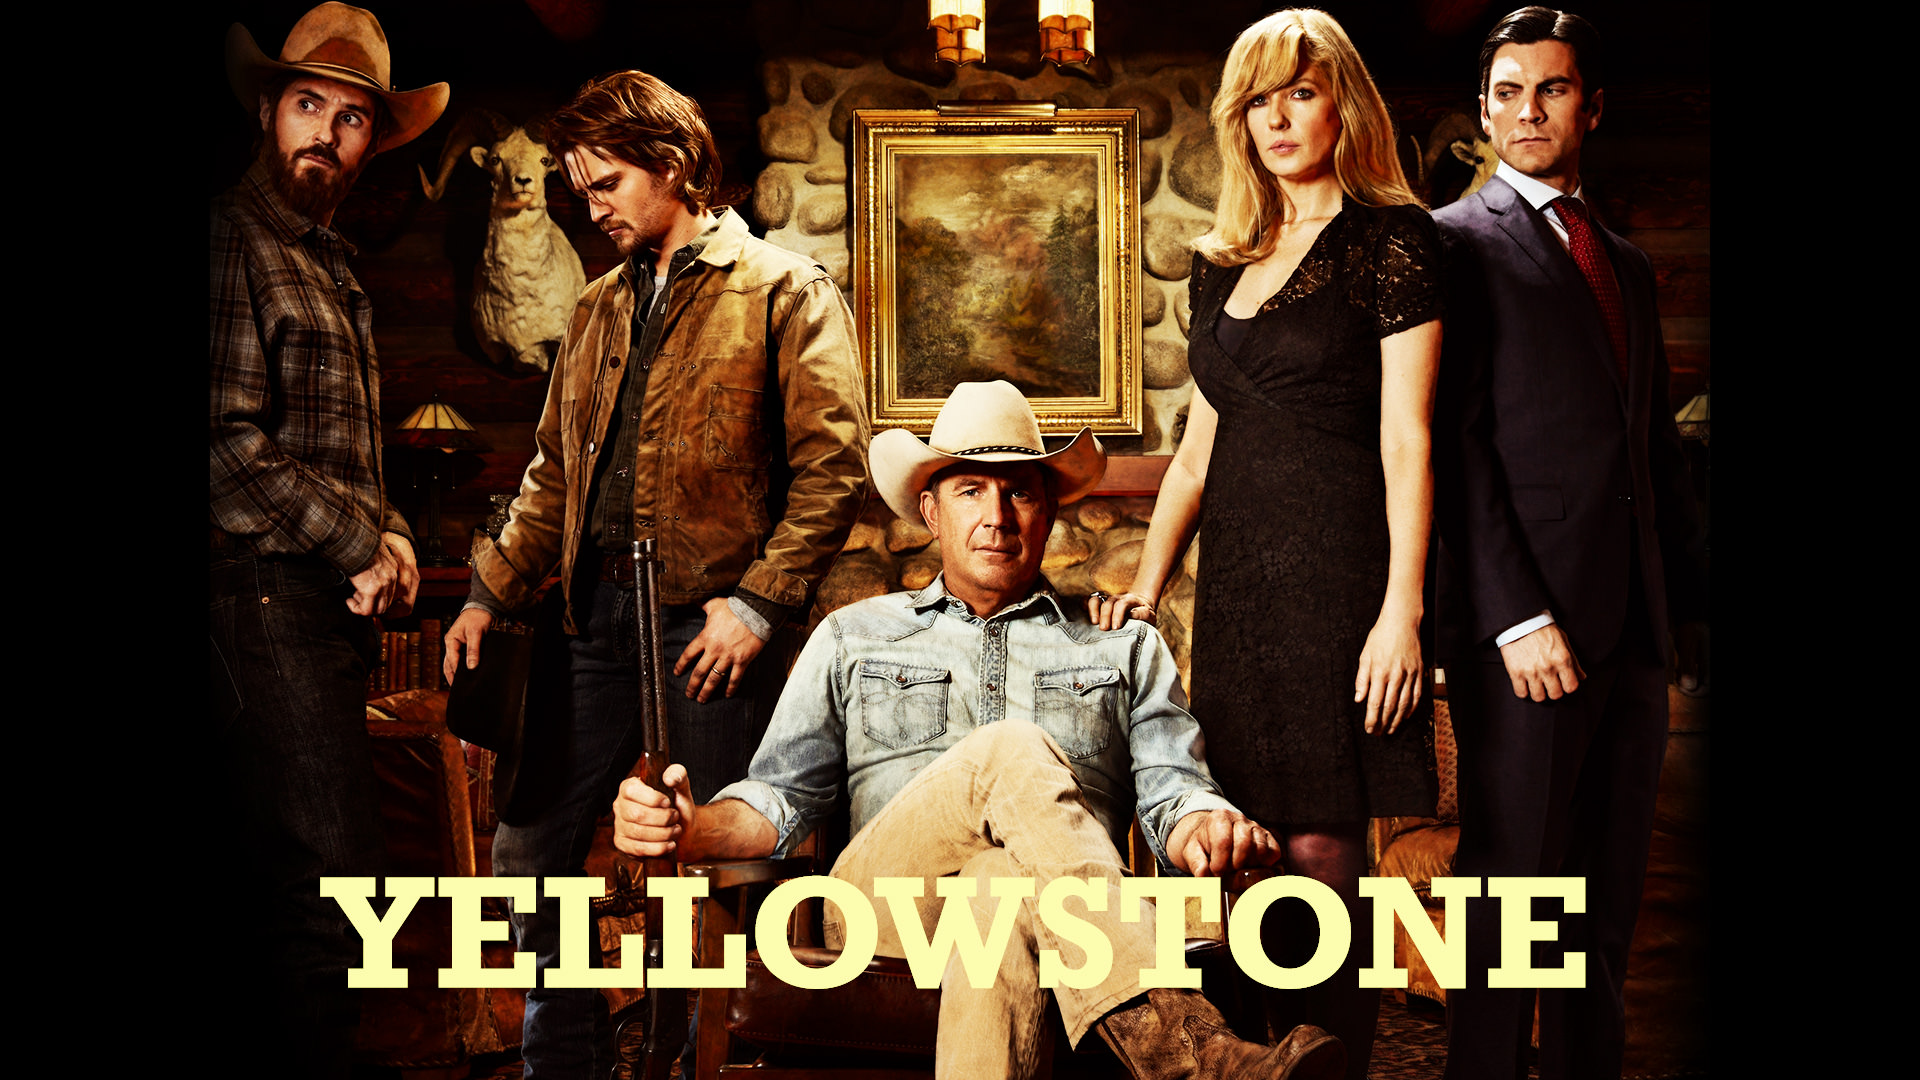 yellowstone season 4 episodes schedule